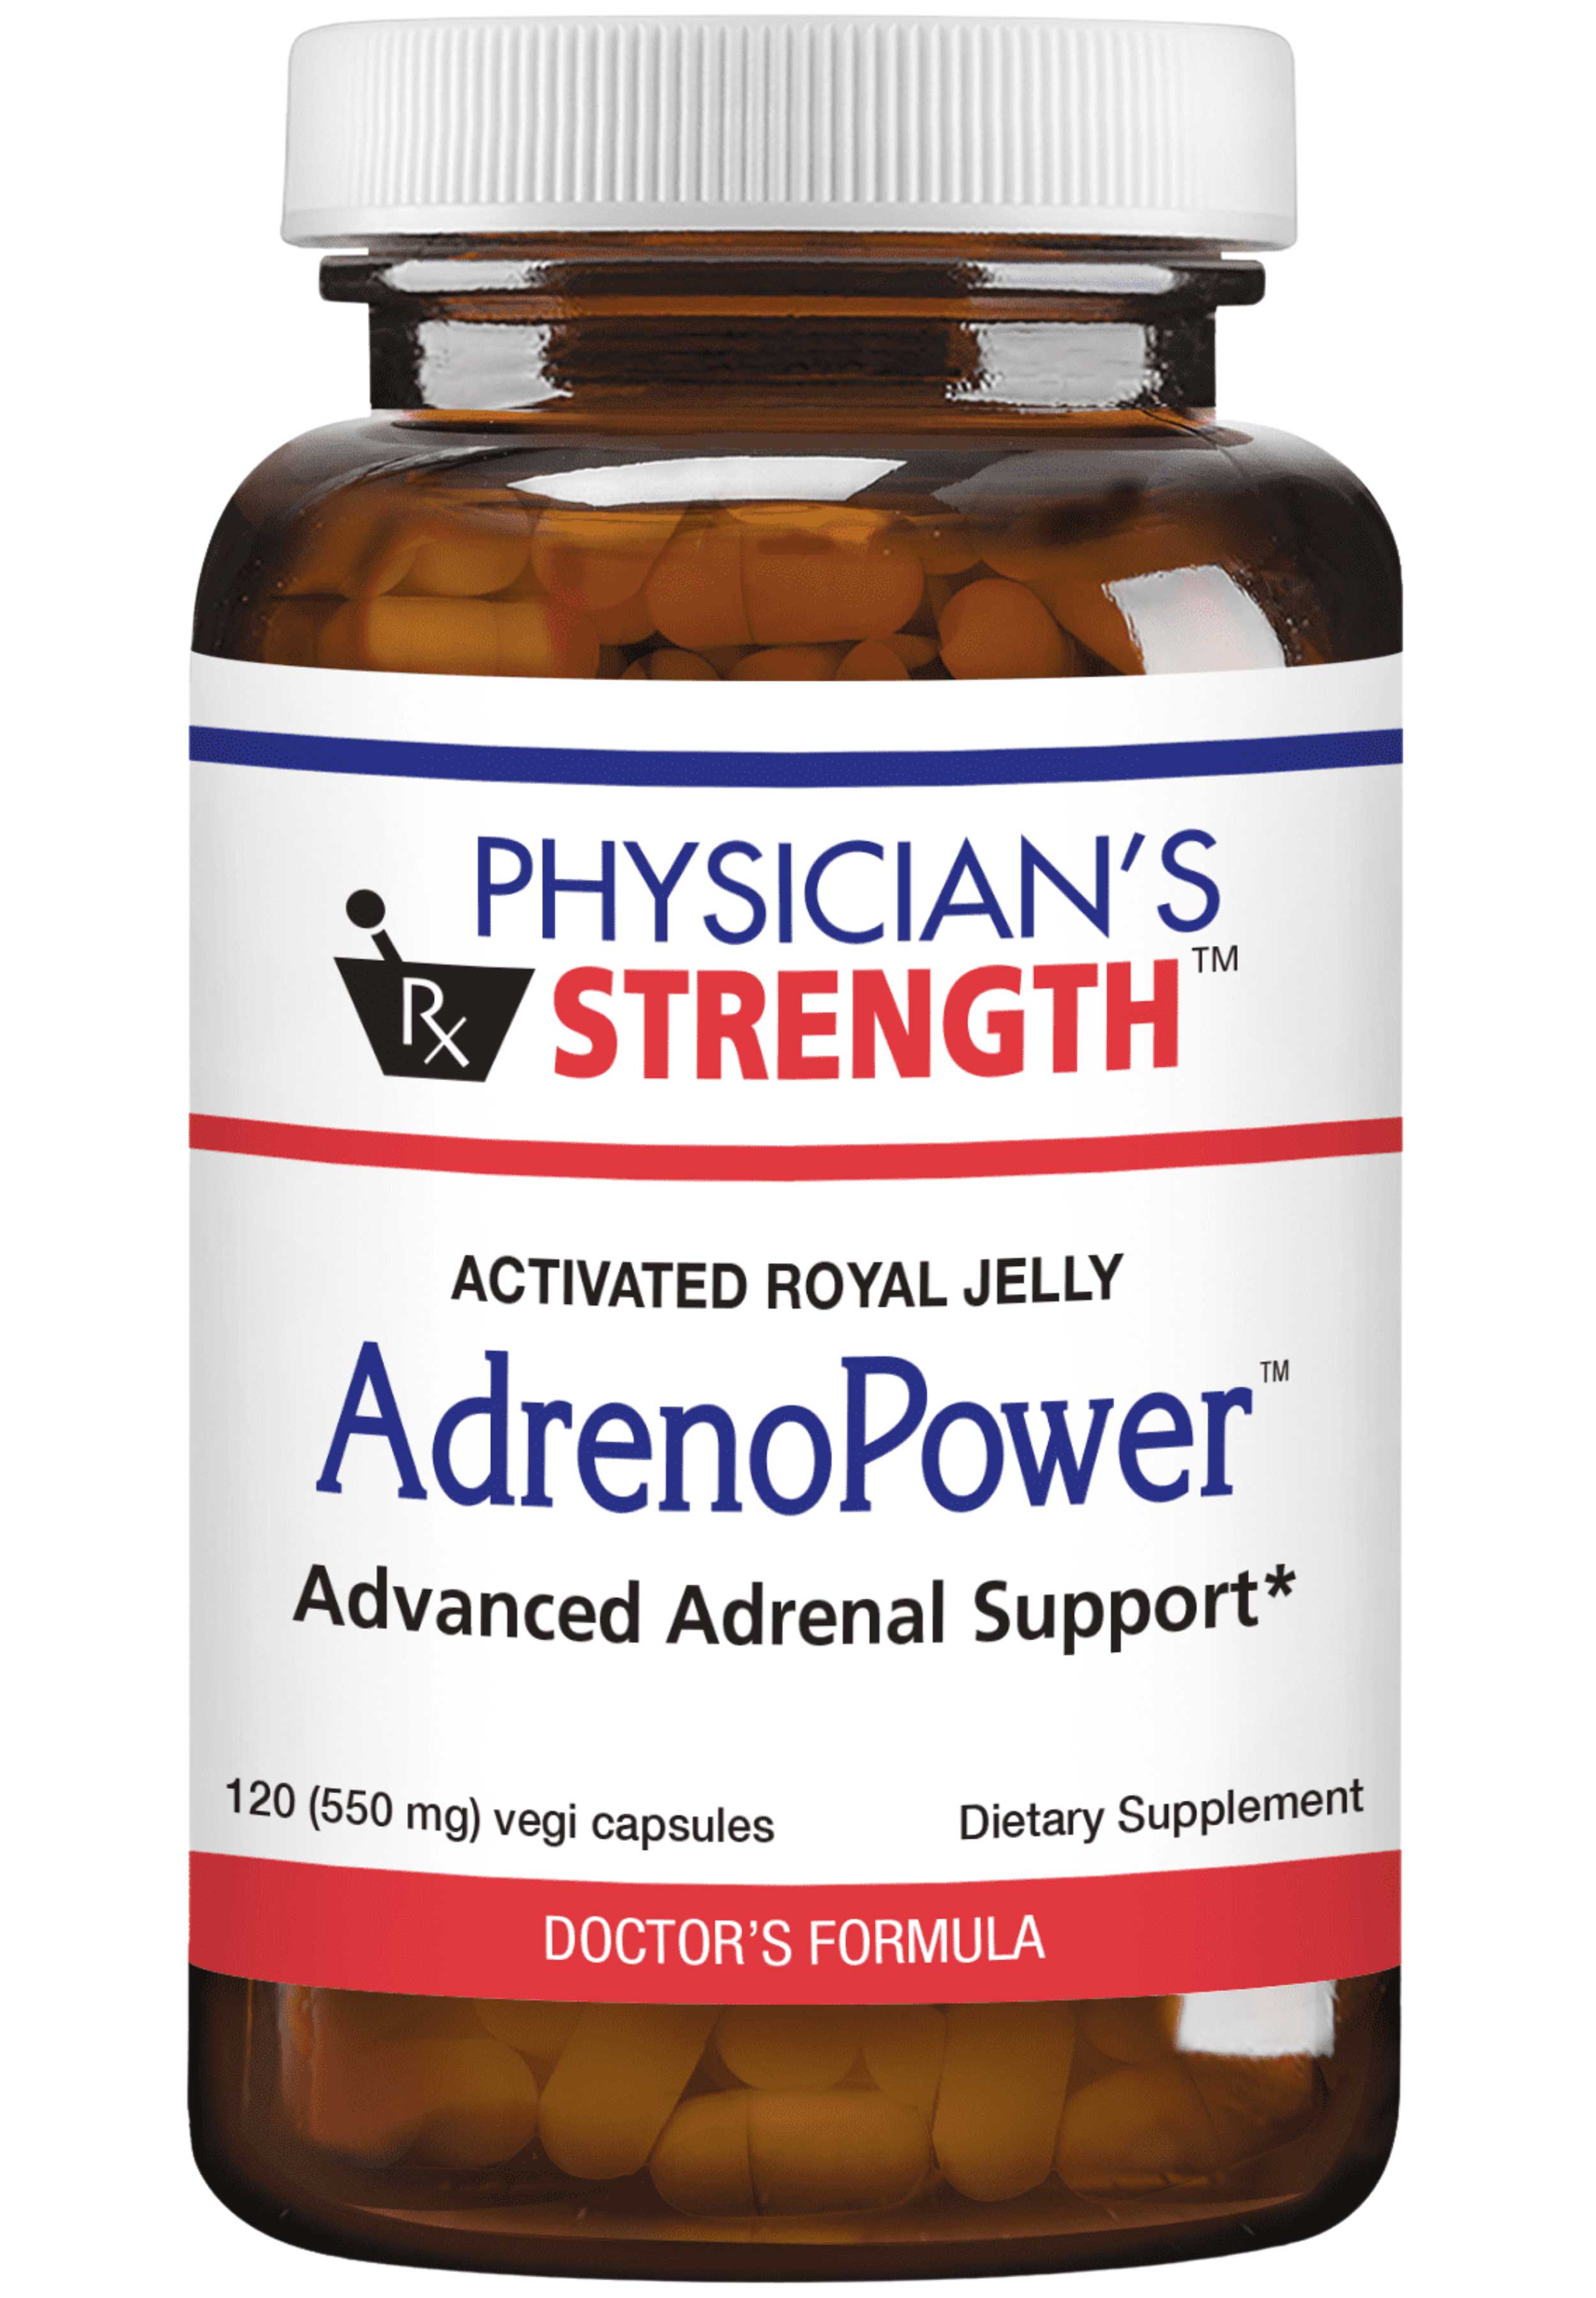 Physician's Strength AdrenoPower